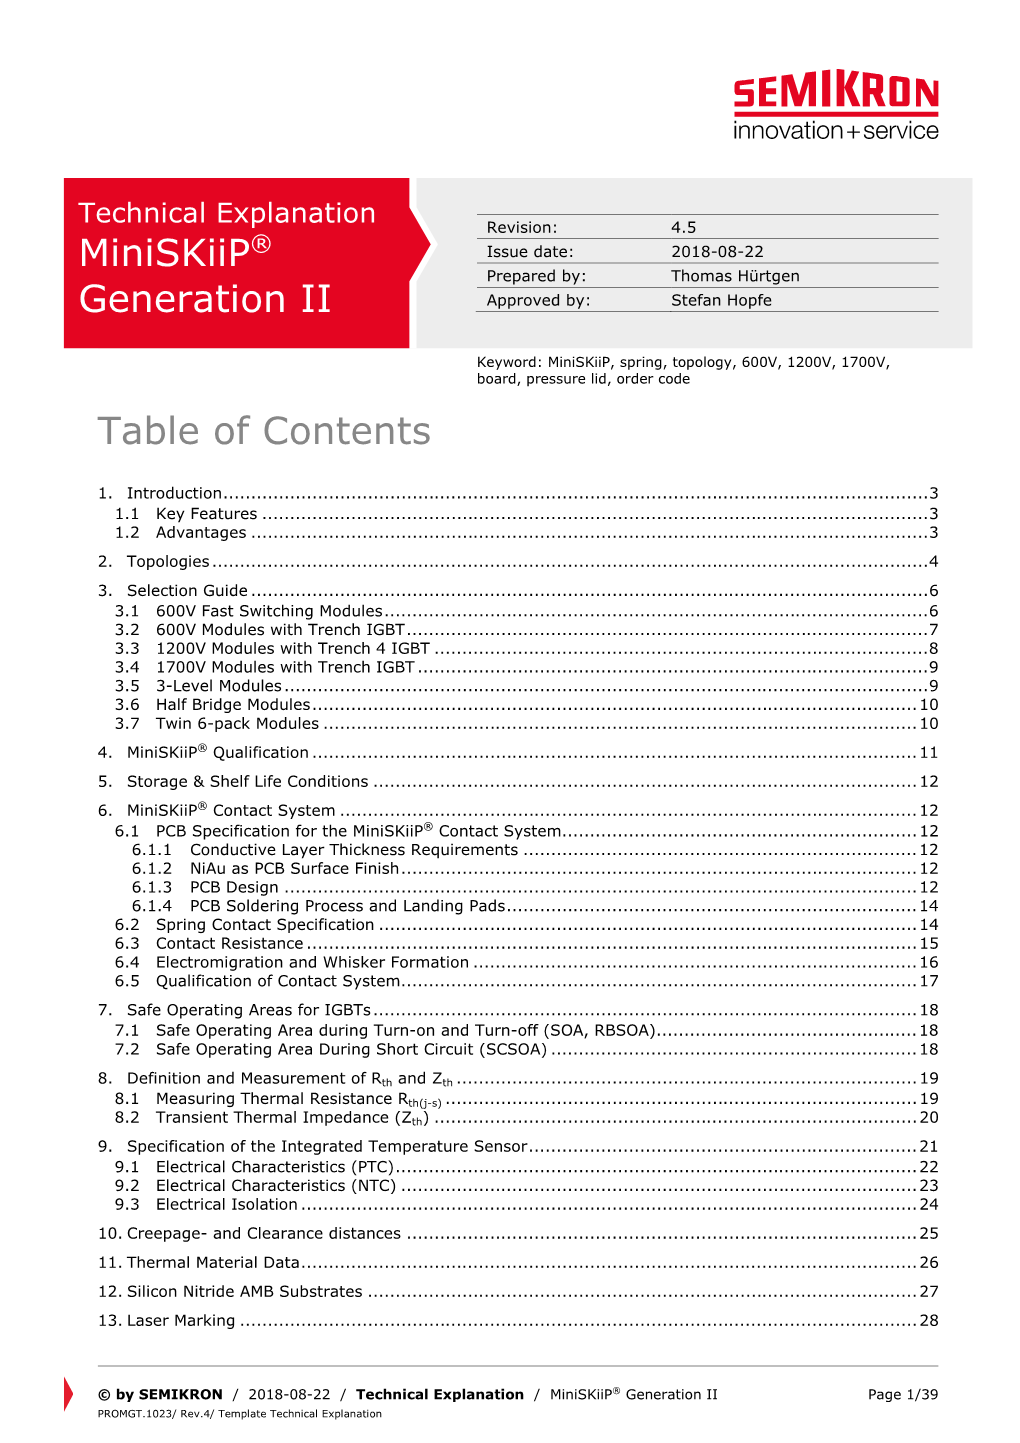 Table of Contents Miniskiip® Generation II